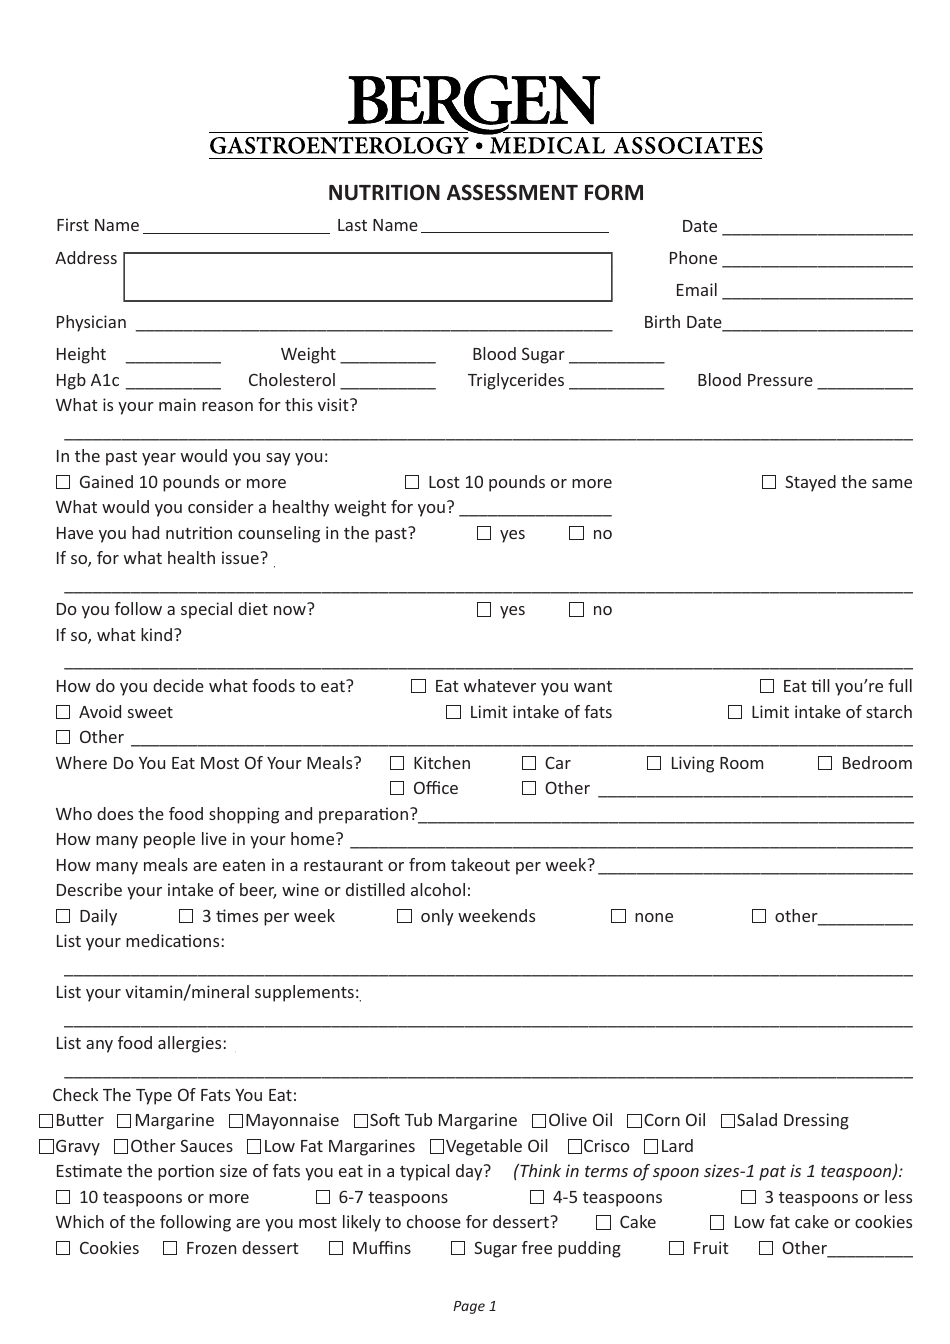 Nutrition Assessment Form - Bergen, Page 1